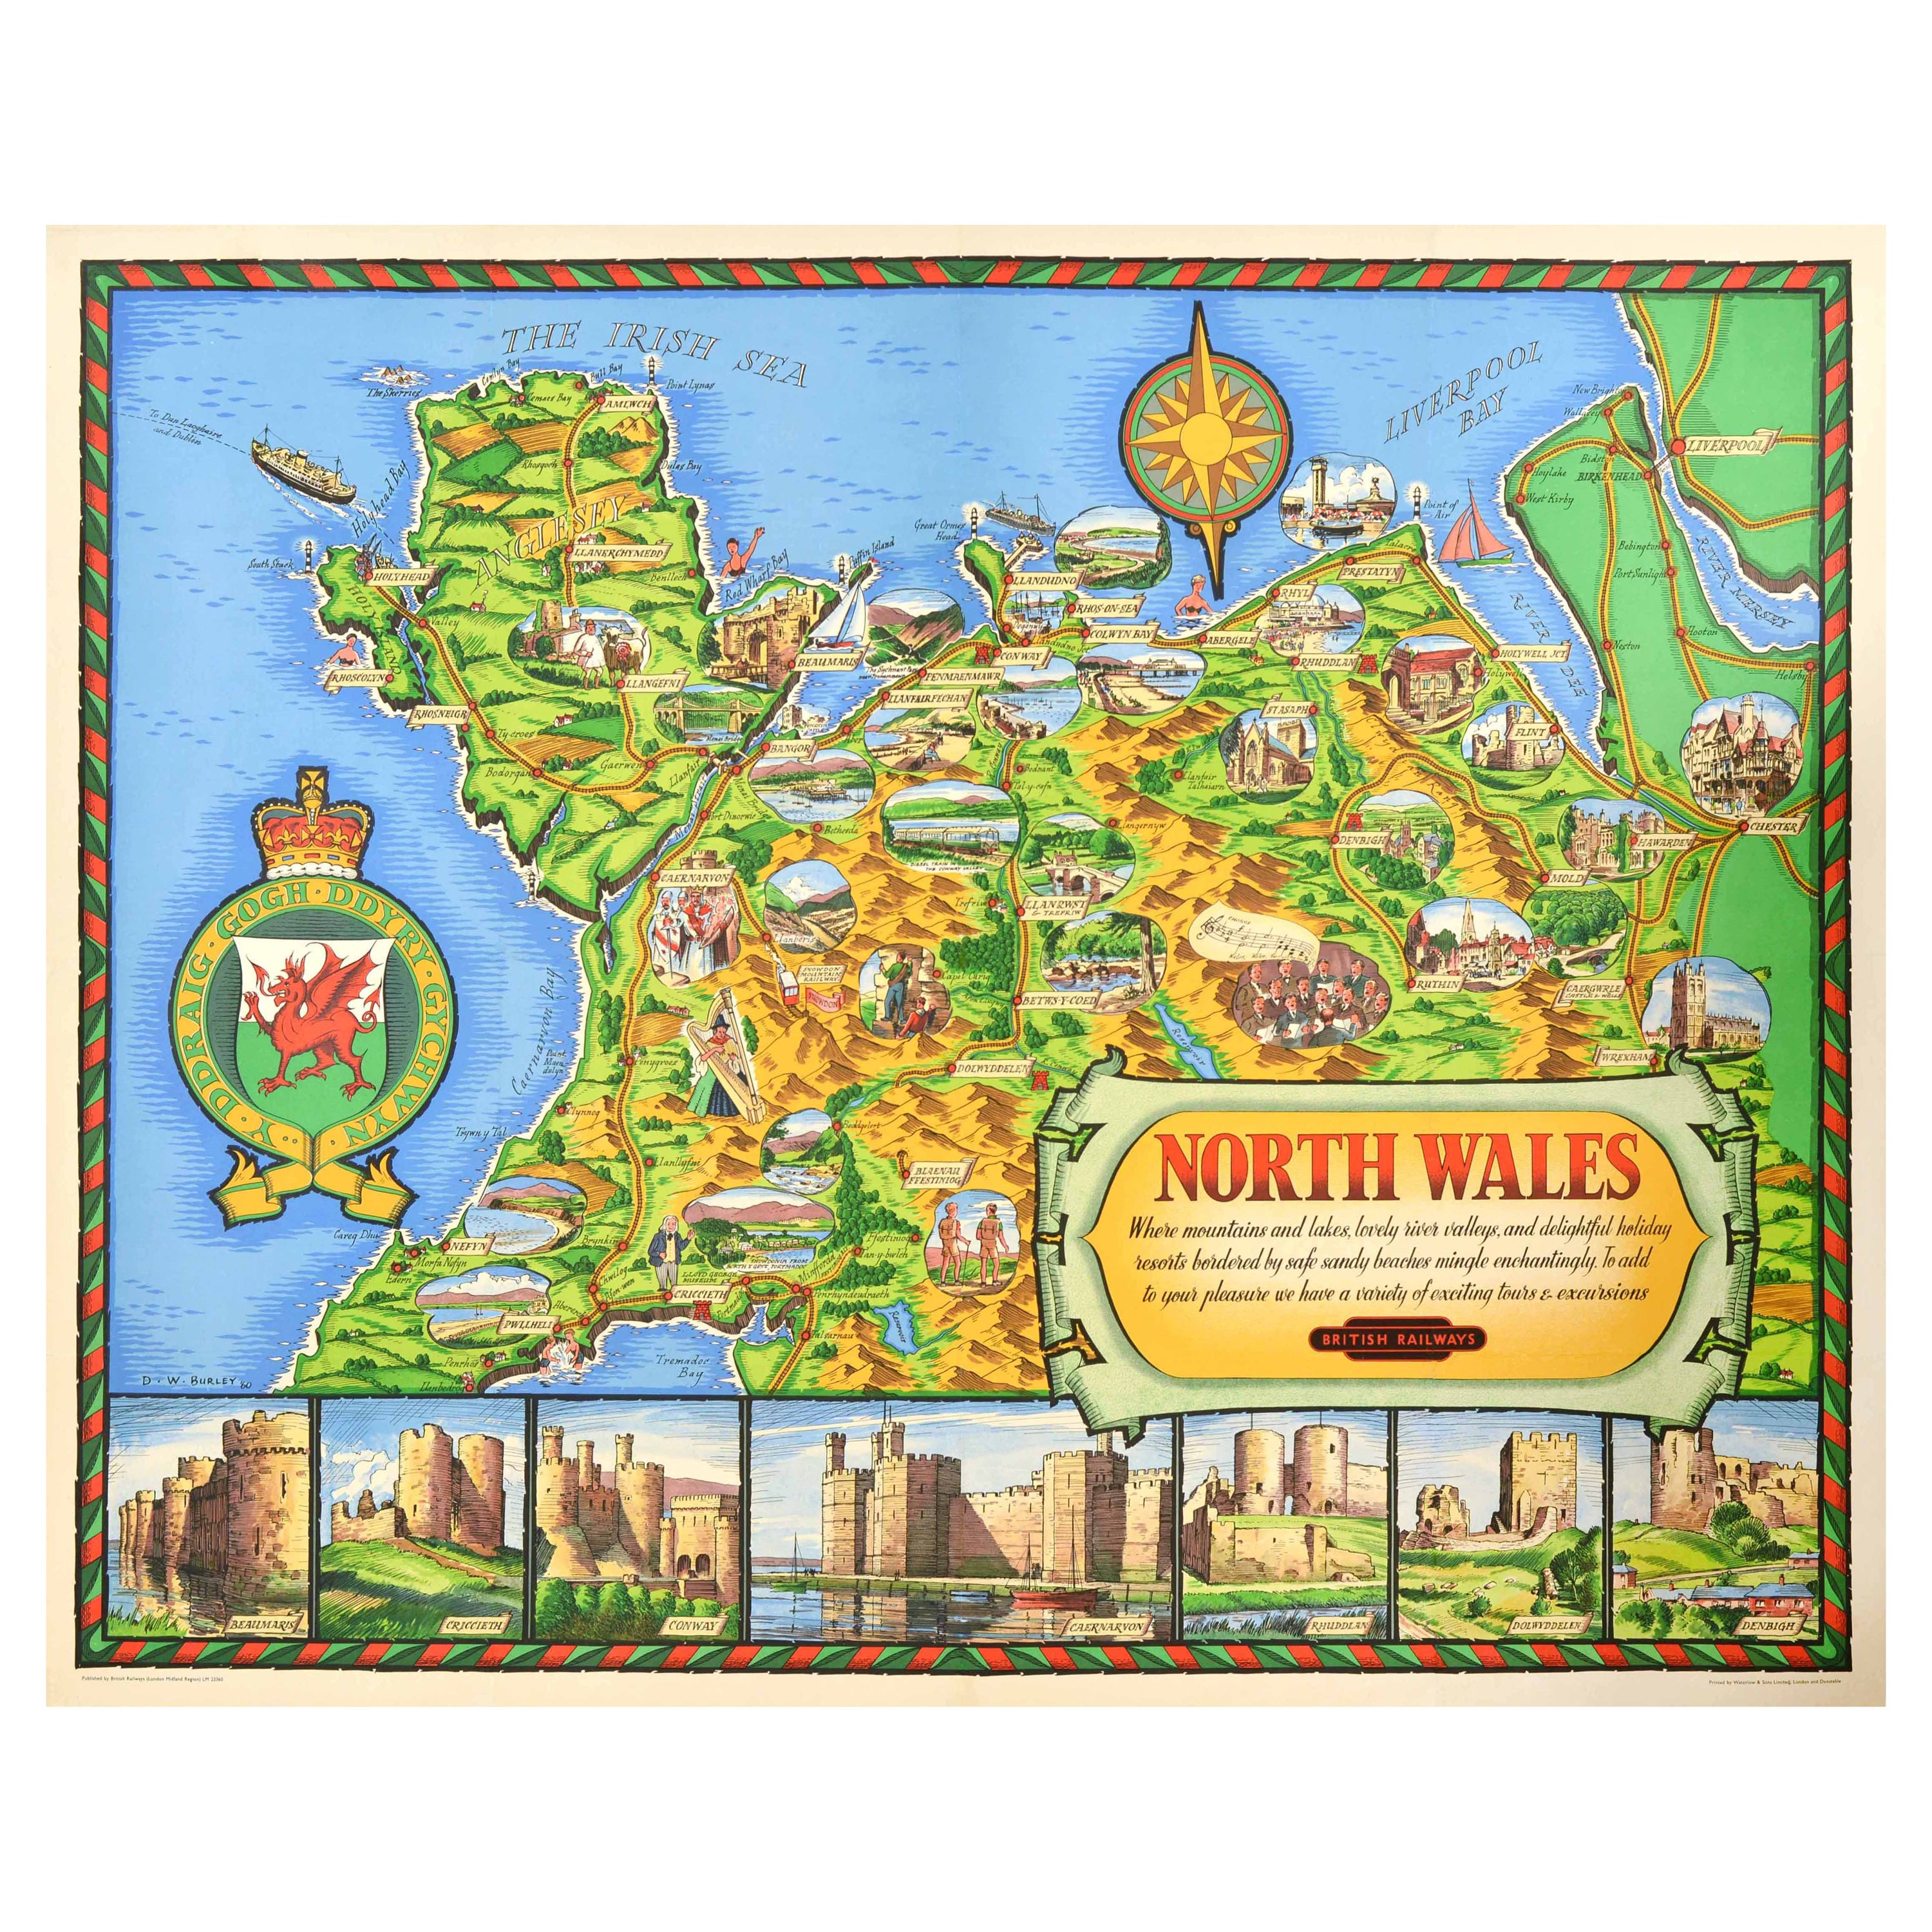 Original Vintage Travel Poster Nord Wales Karte British Railways DW Burley